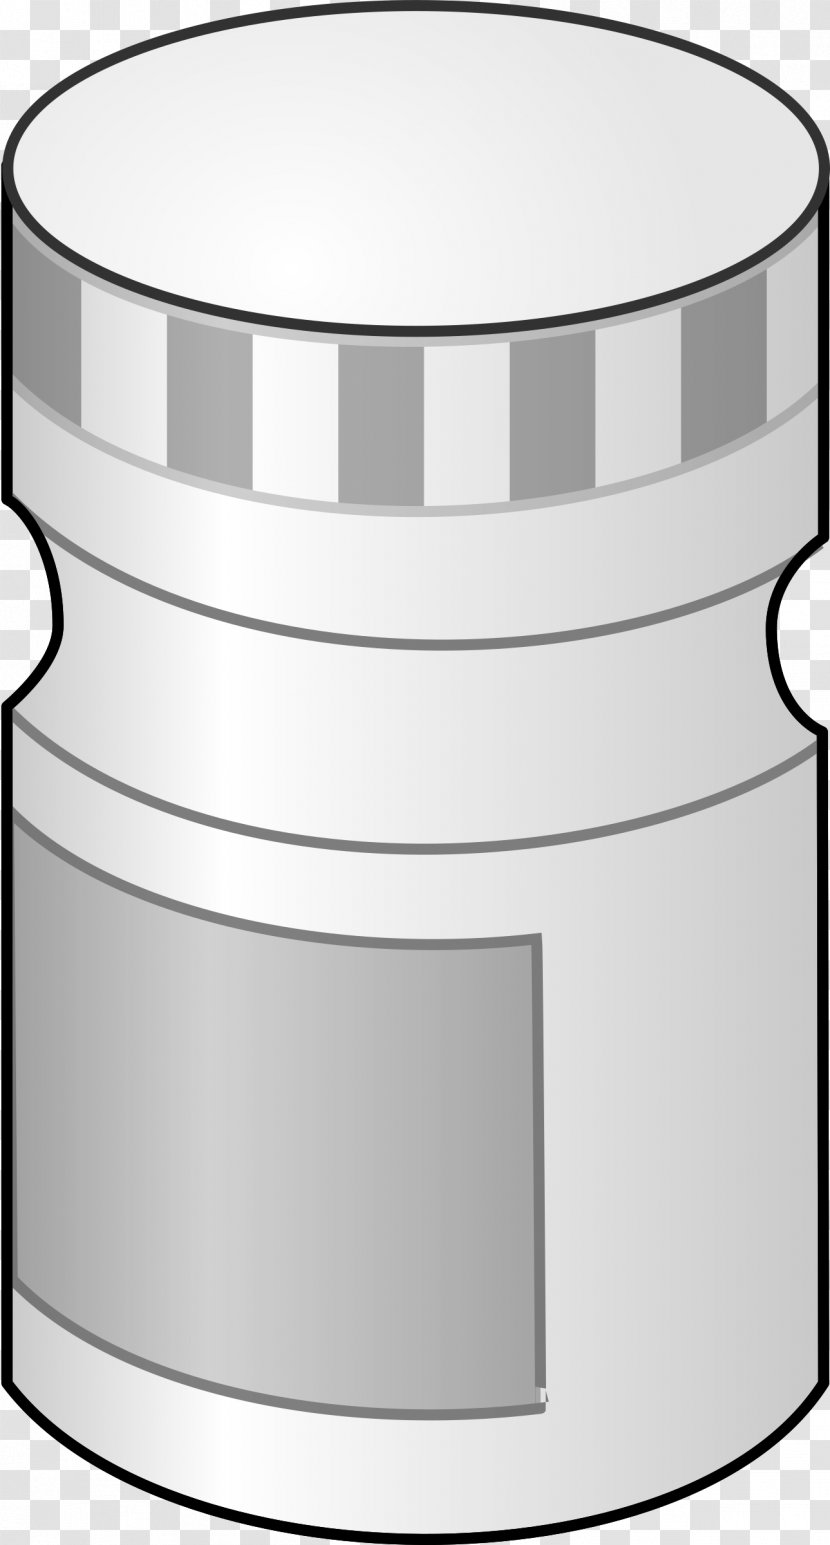 Peanut Butter And Jelly Sandwich Bottle Jar Clip Art - Cylinder Transparent PNG